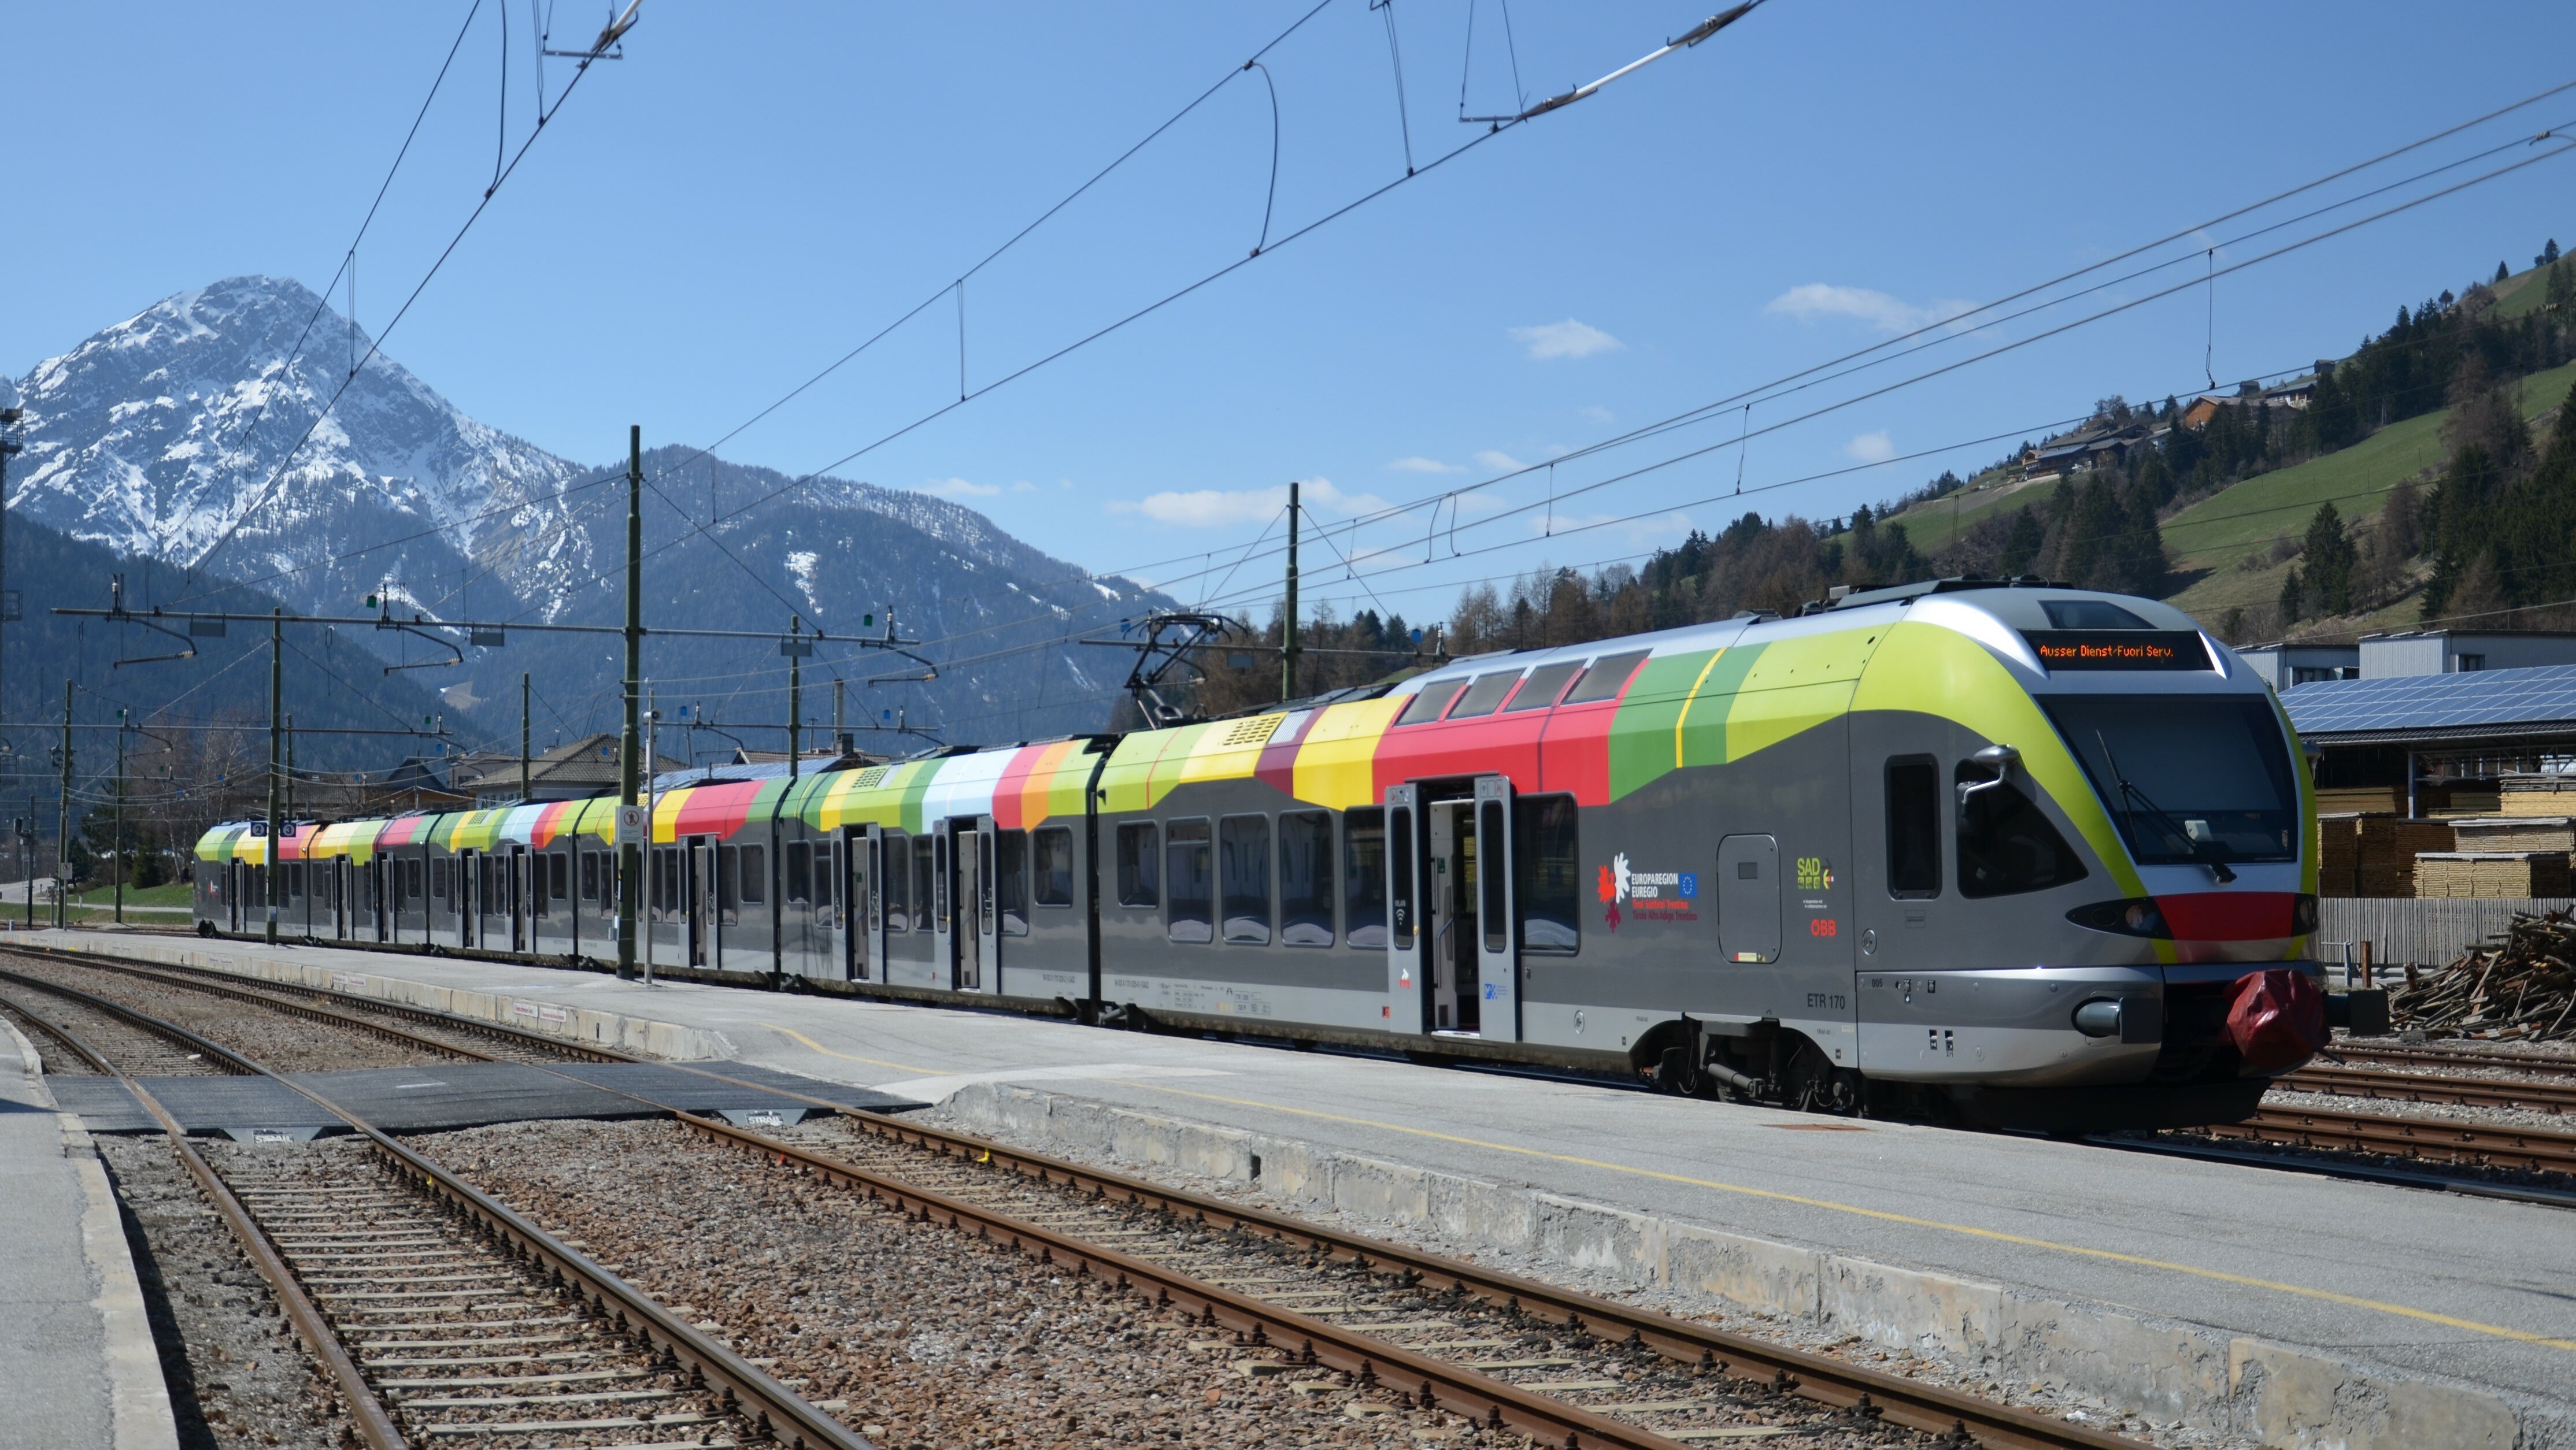 The Val Pusteria / Pustertal railway